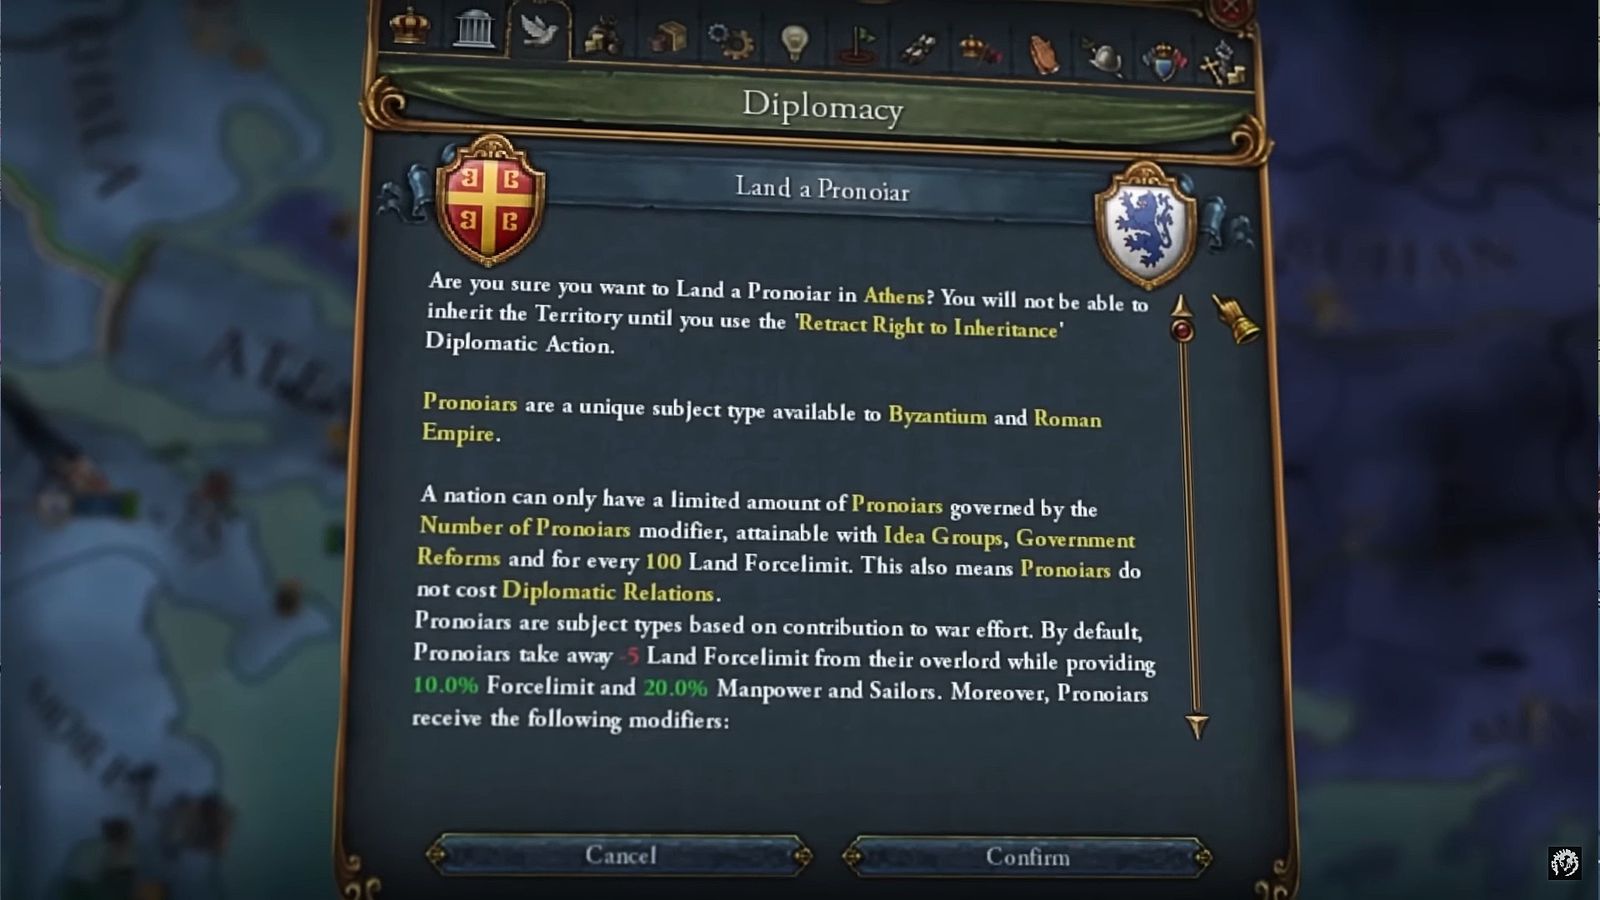 Europa Universalis 4: Diplomacy menu including the "Land a Pronoiar" decision